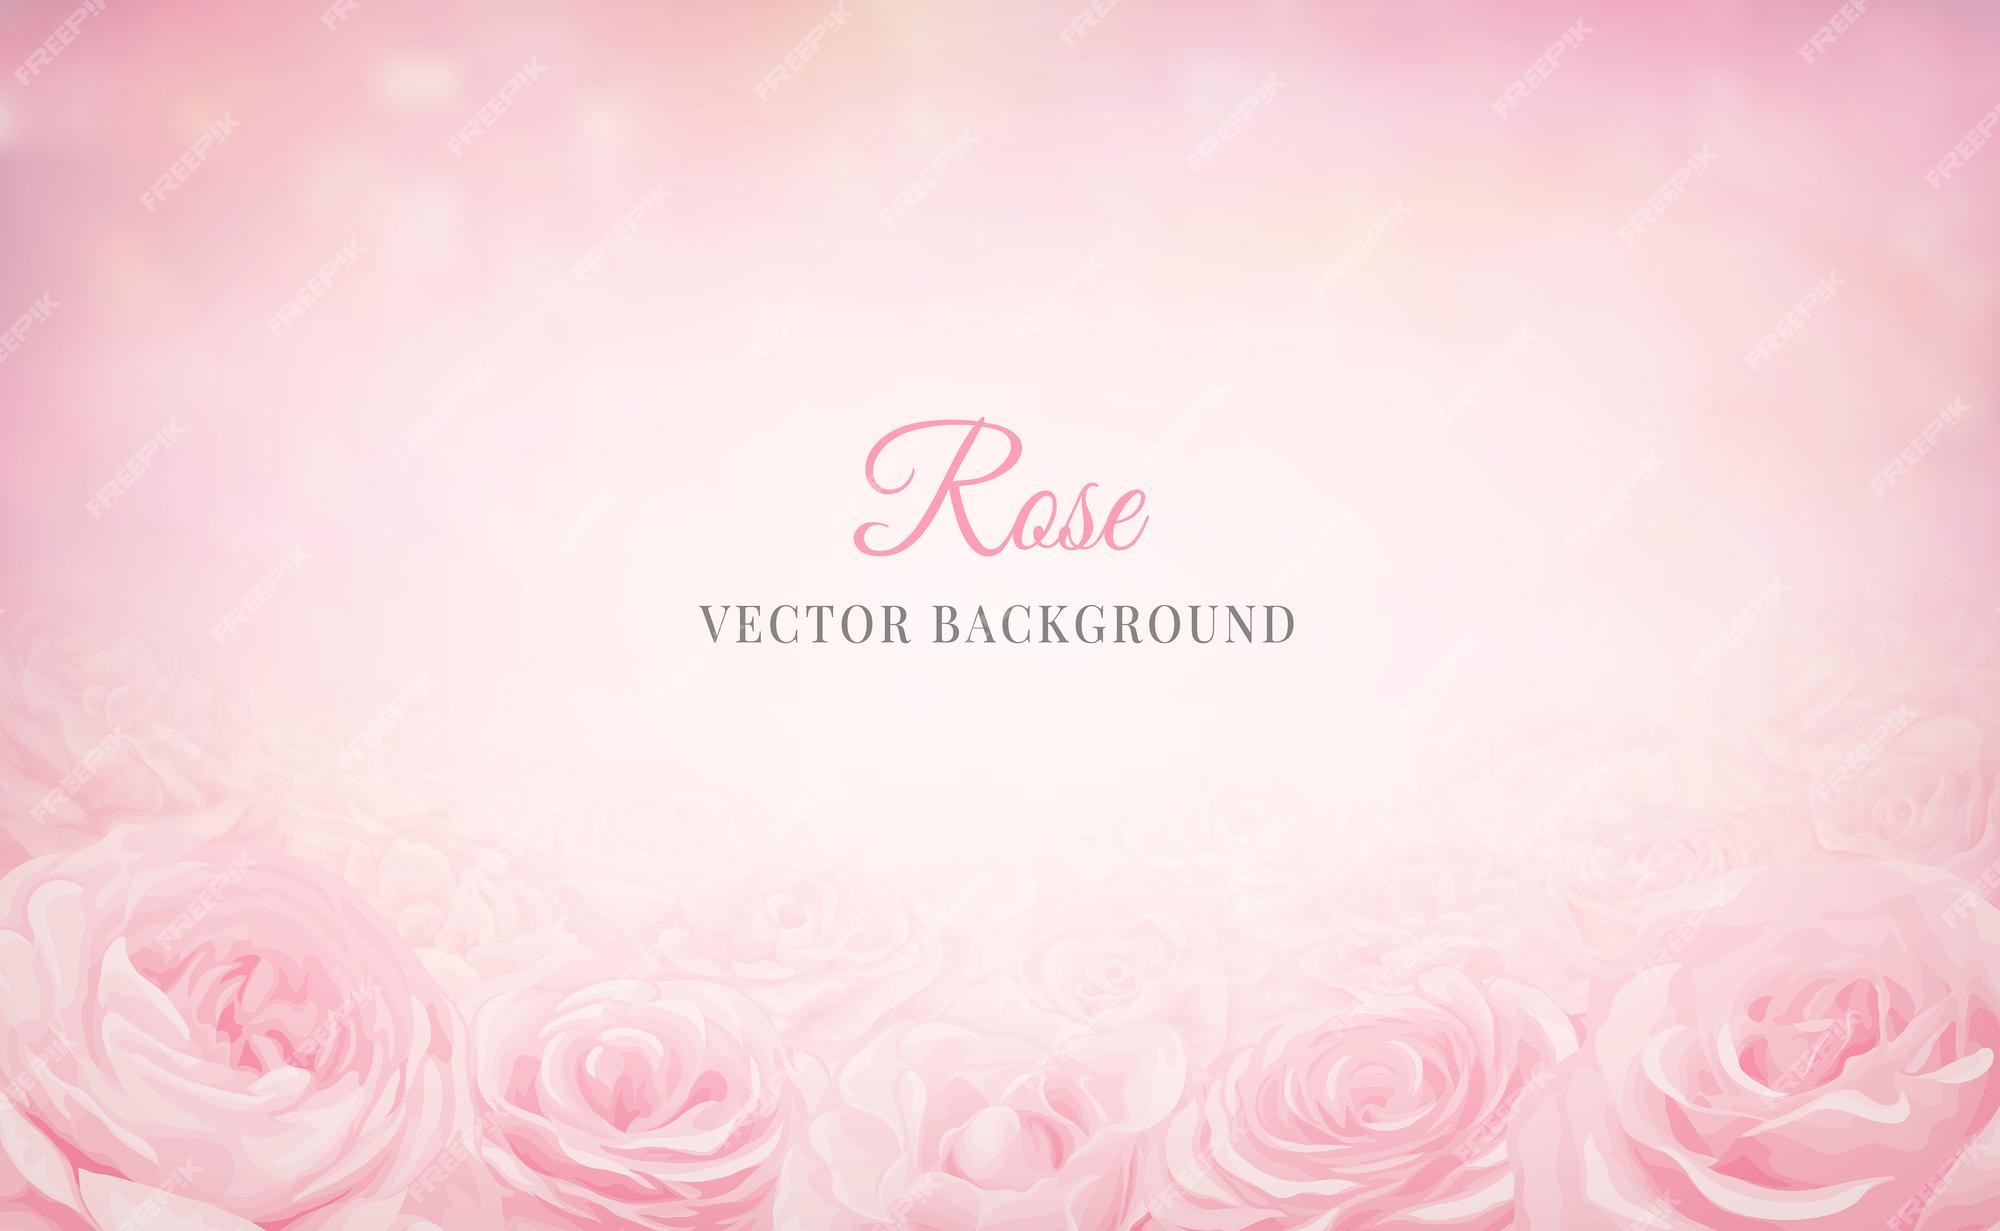 Rose Background Images - Free Download on Freepik